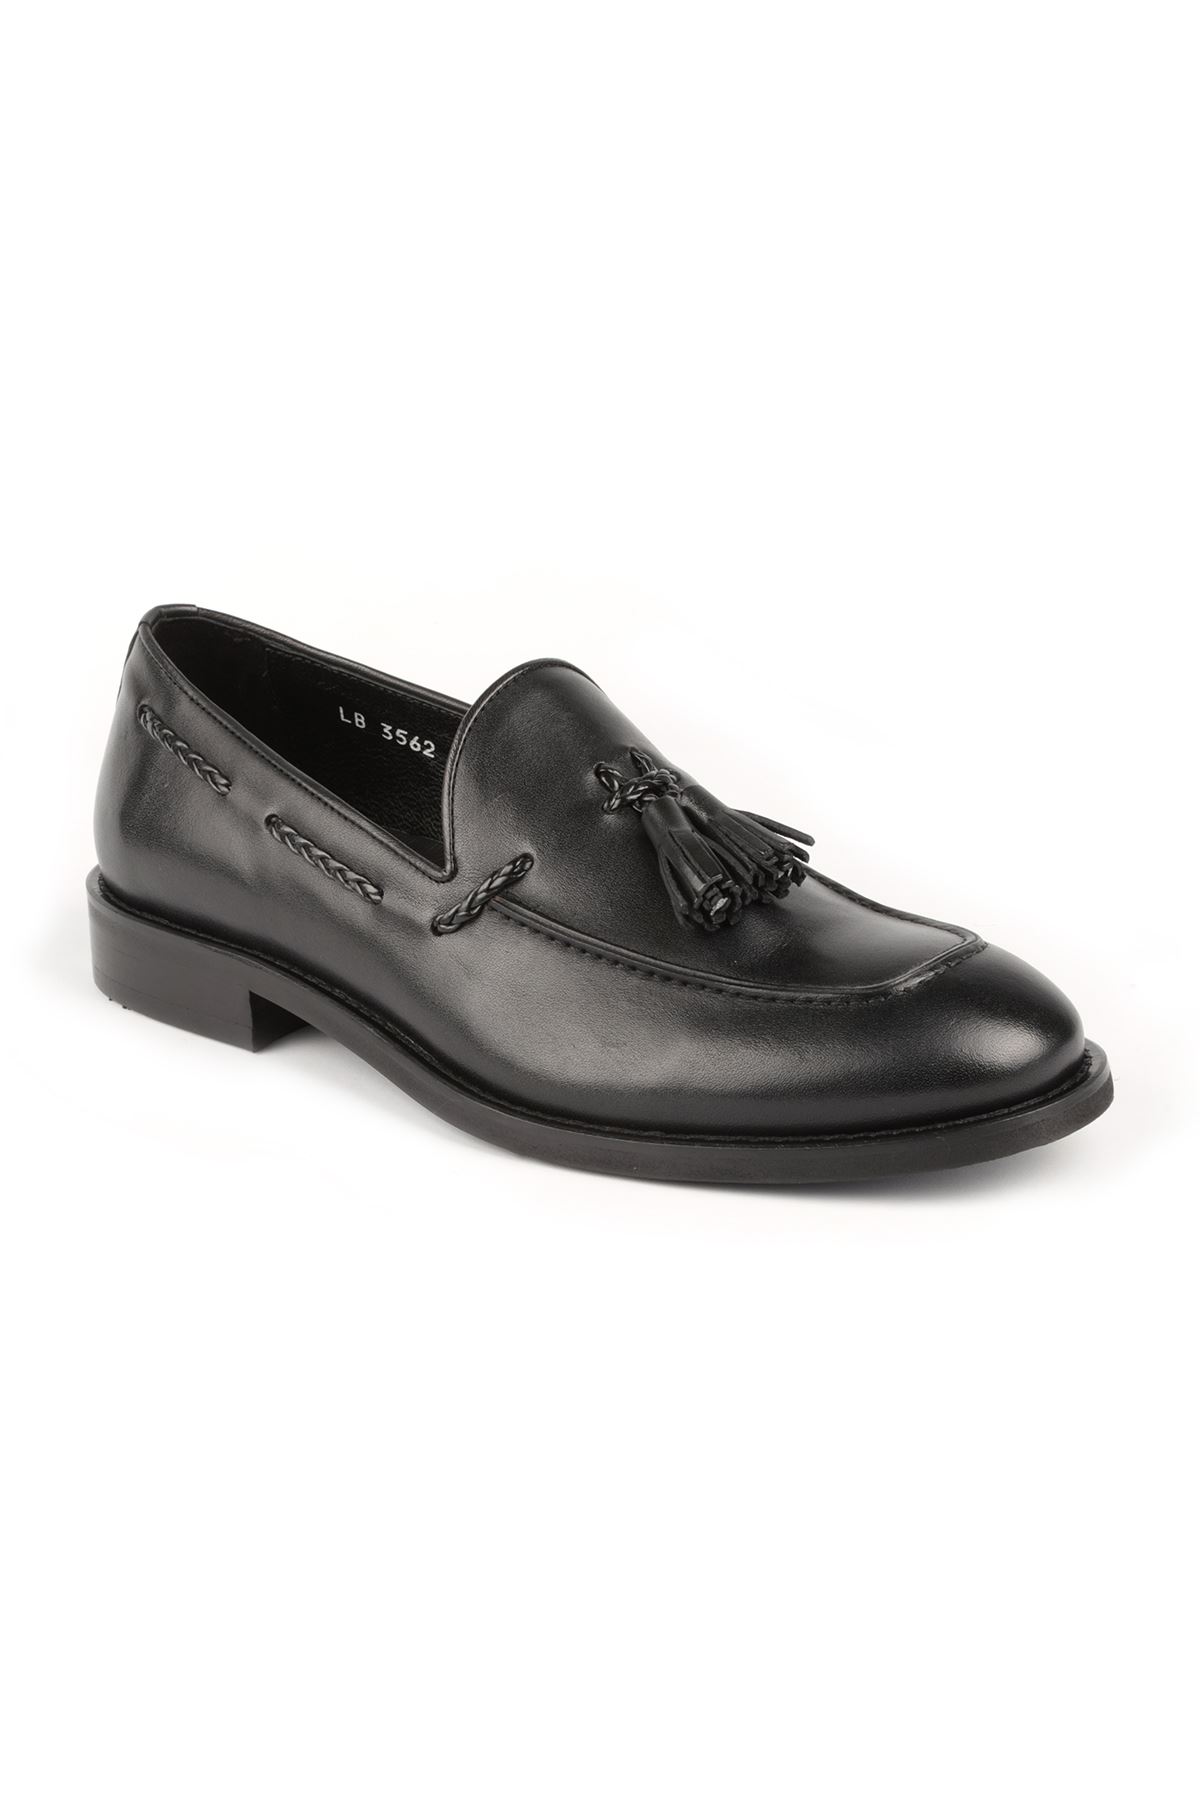 Libero L3562 Black Loafer Casual Shoes